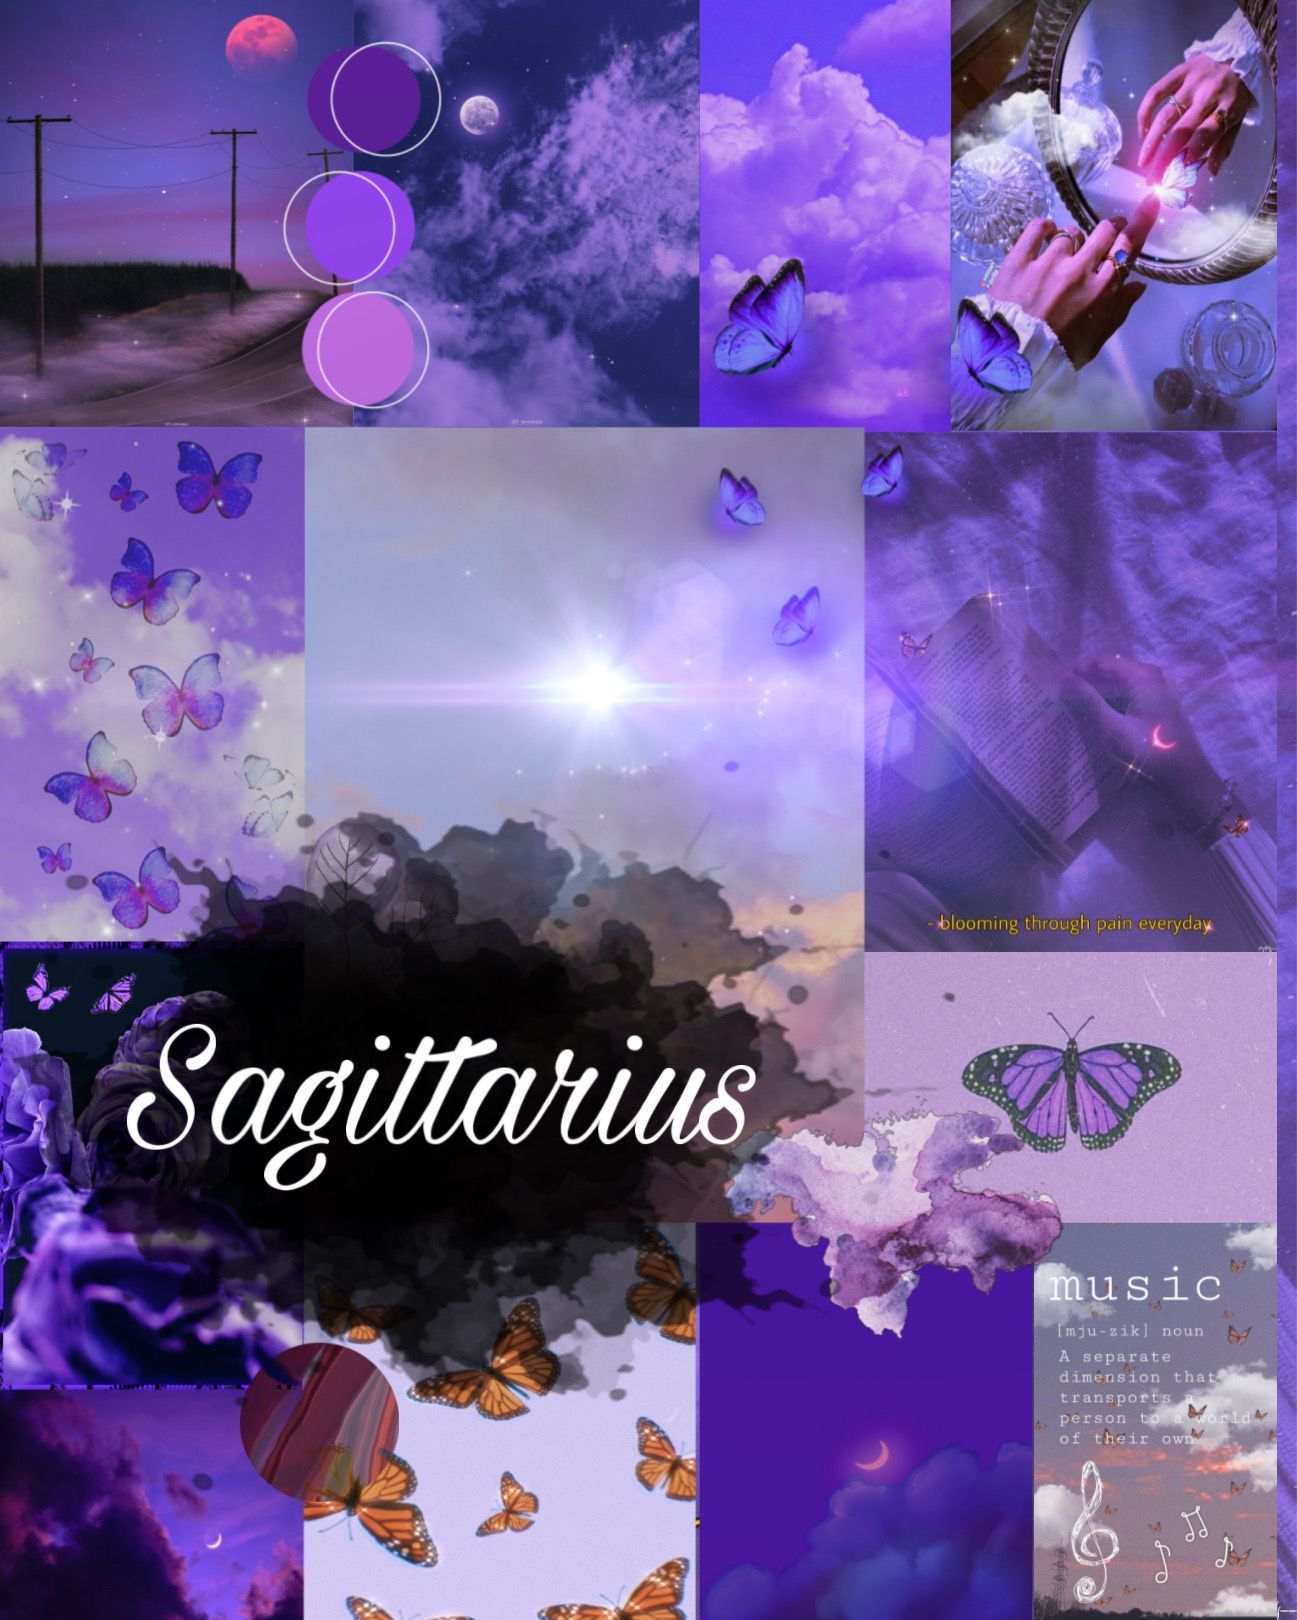 Zodiac sign sag. Sagittarius wallpaper, Zodiac signs sagittarius, Sagittarius art